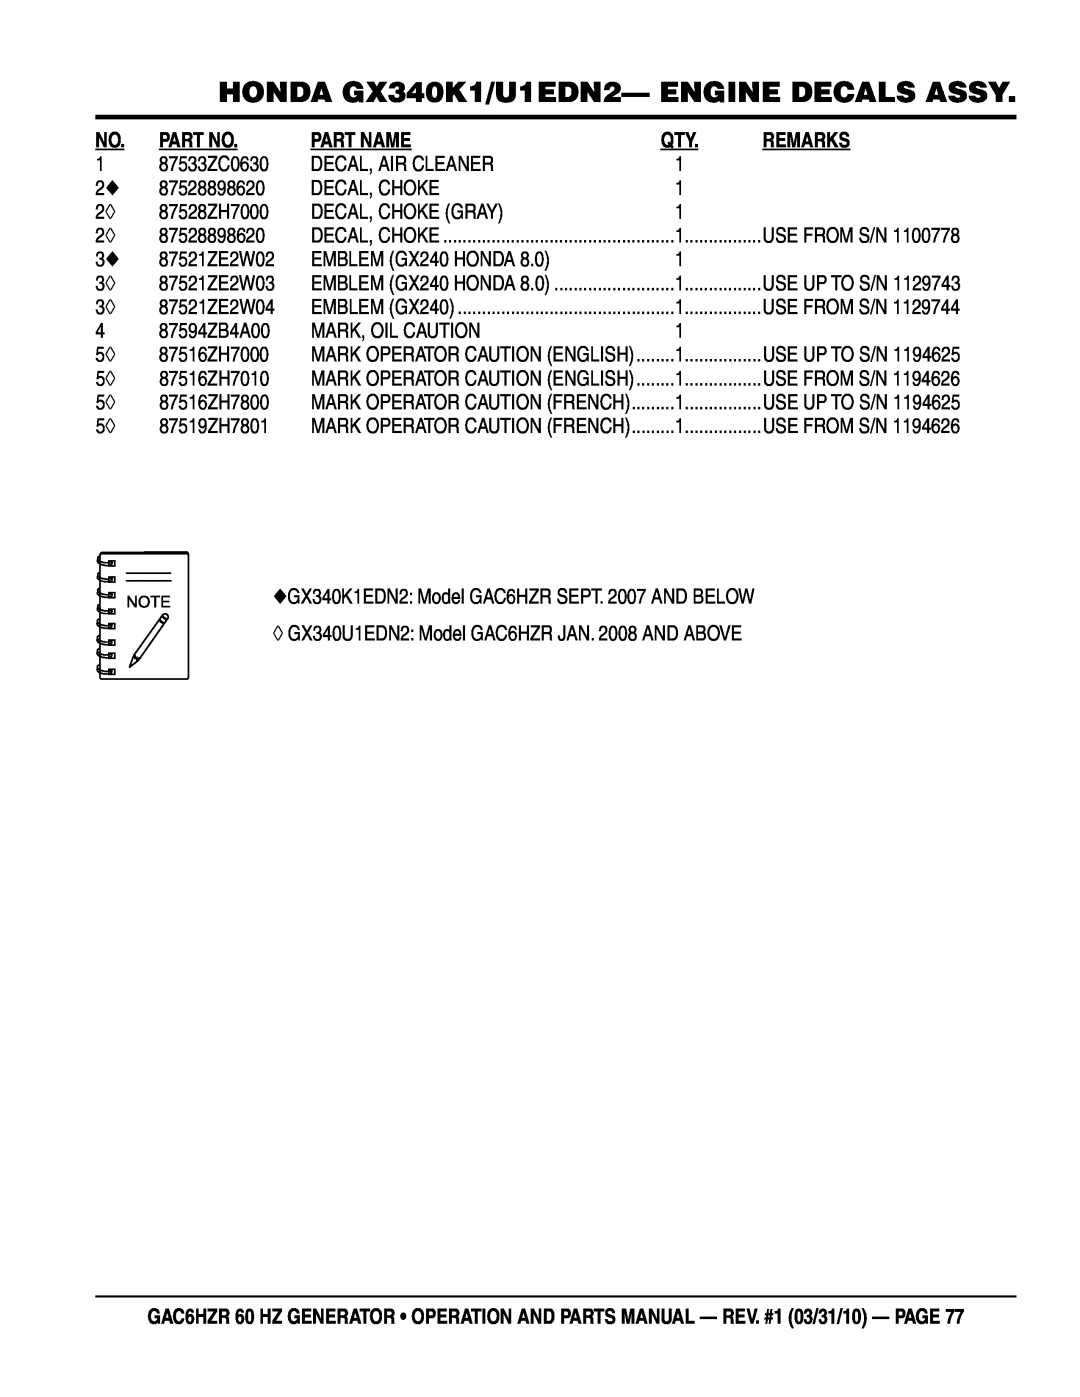 Multiquip GAC-6HZR manual HONDA GX340K1/U1EDN2- ENGINE DECALS ASSY, Part Name, Remarks 